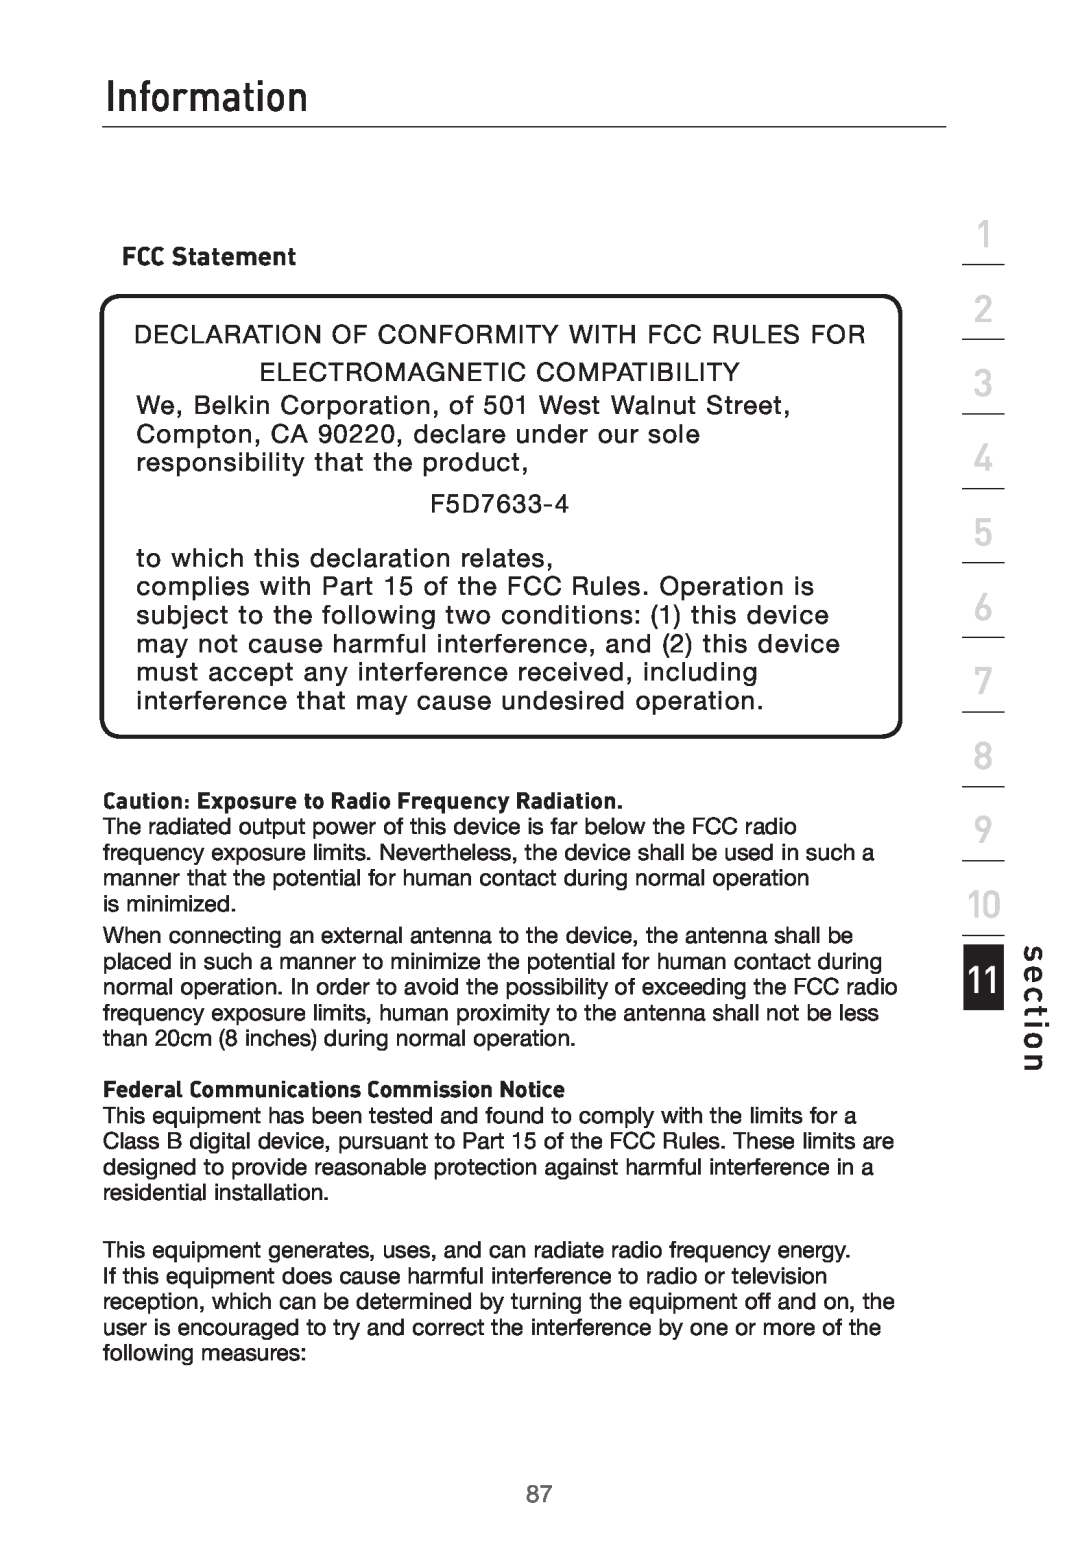 Belkin Pre-N manual Information, FCC Statement, section 